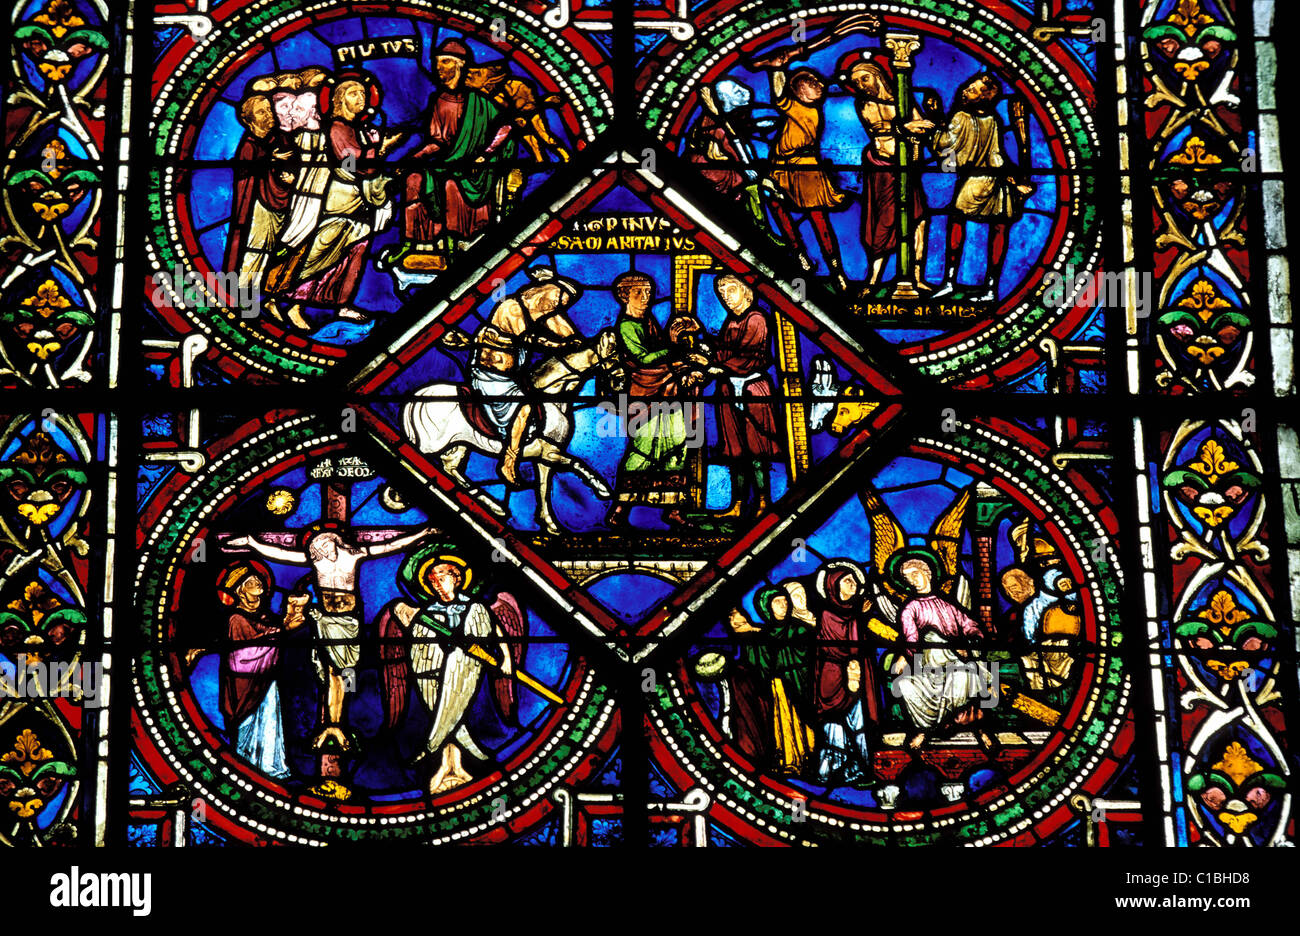 Francia, Yonne, Sens, la catedral Saint Etienne, vidriera evocating la parábola del buen samaritano (finales del siglo xii) Foto de stock